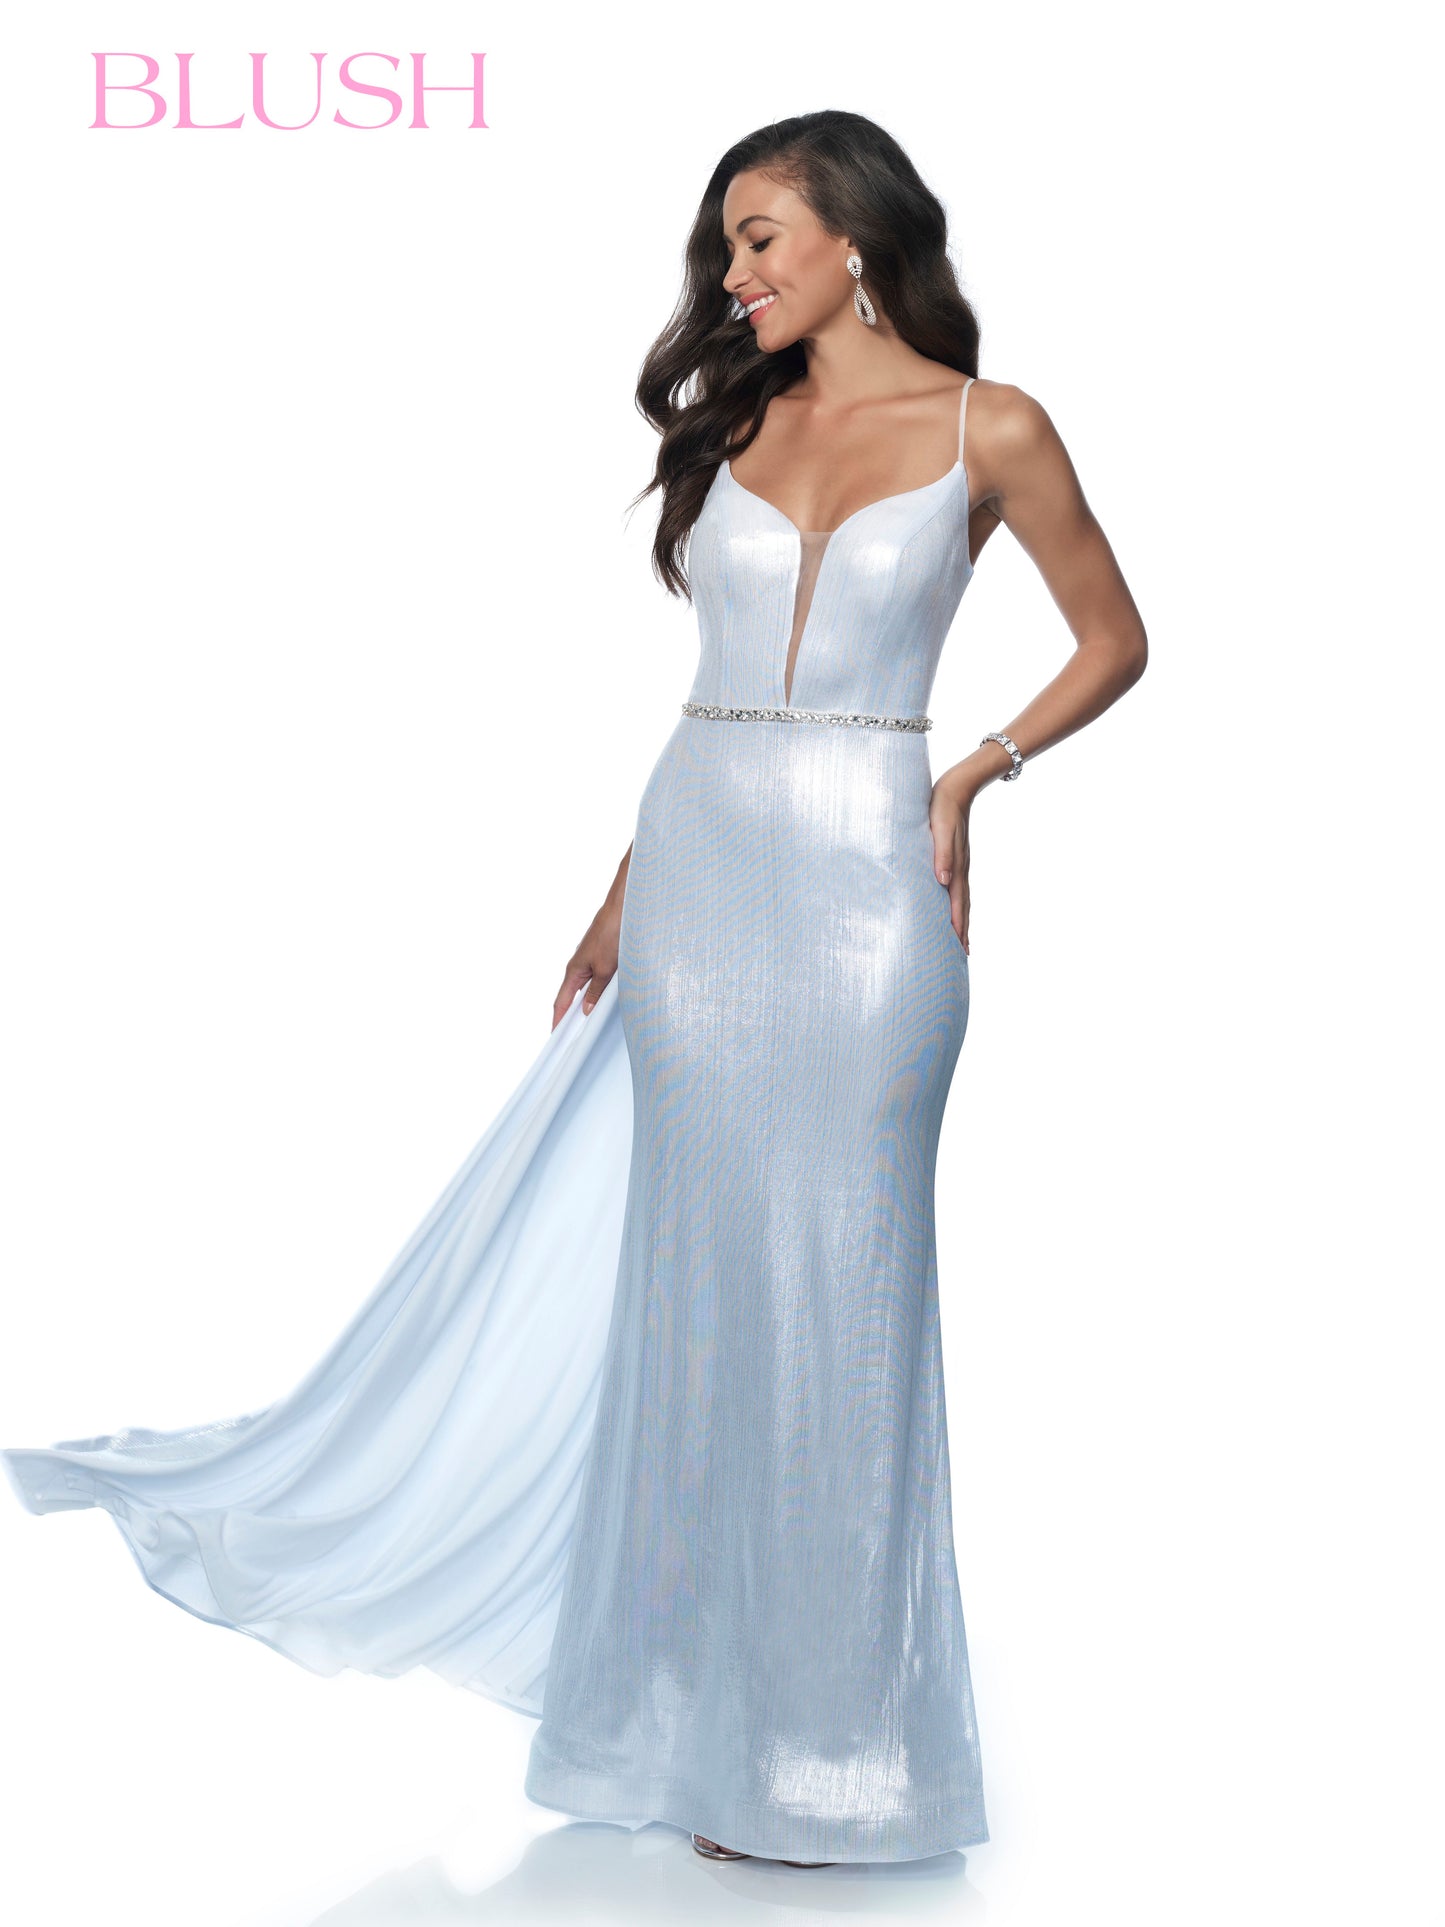 Blush Prom 11983 Size 12 Sapphire Long Metallic Prom Dress Plunging Neckline Sheer Back